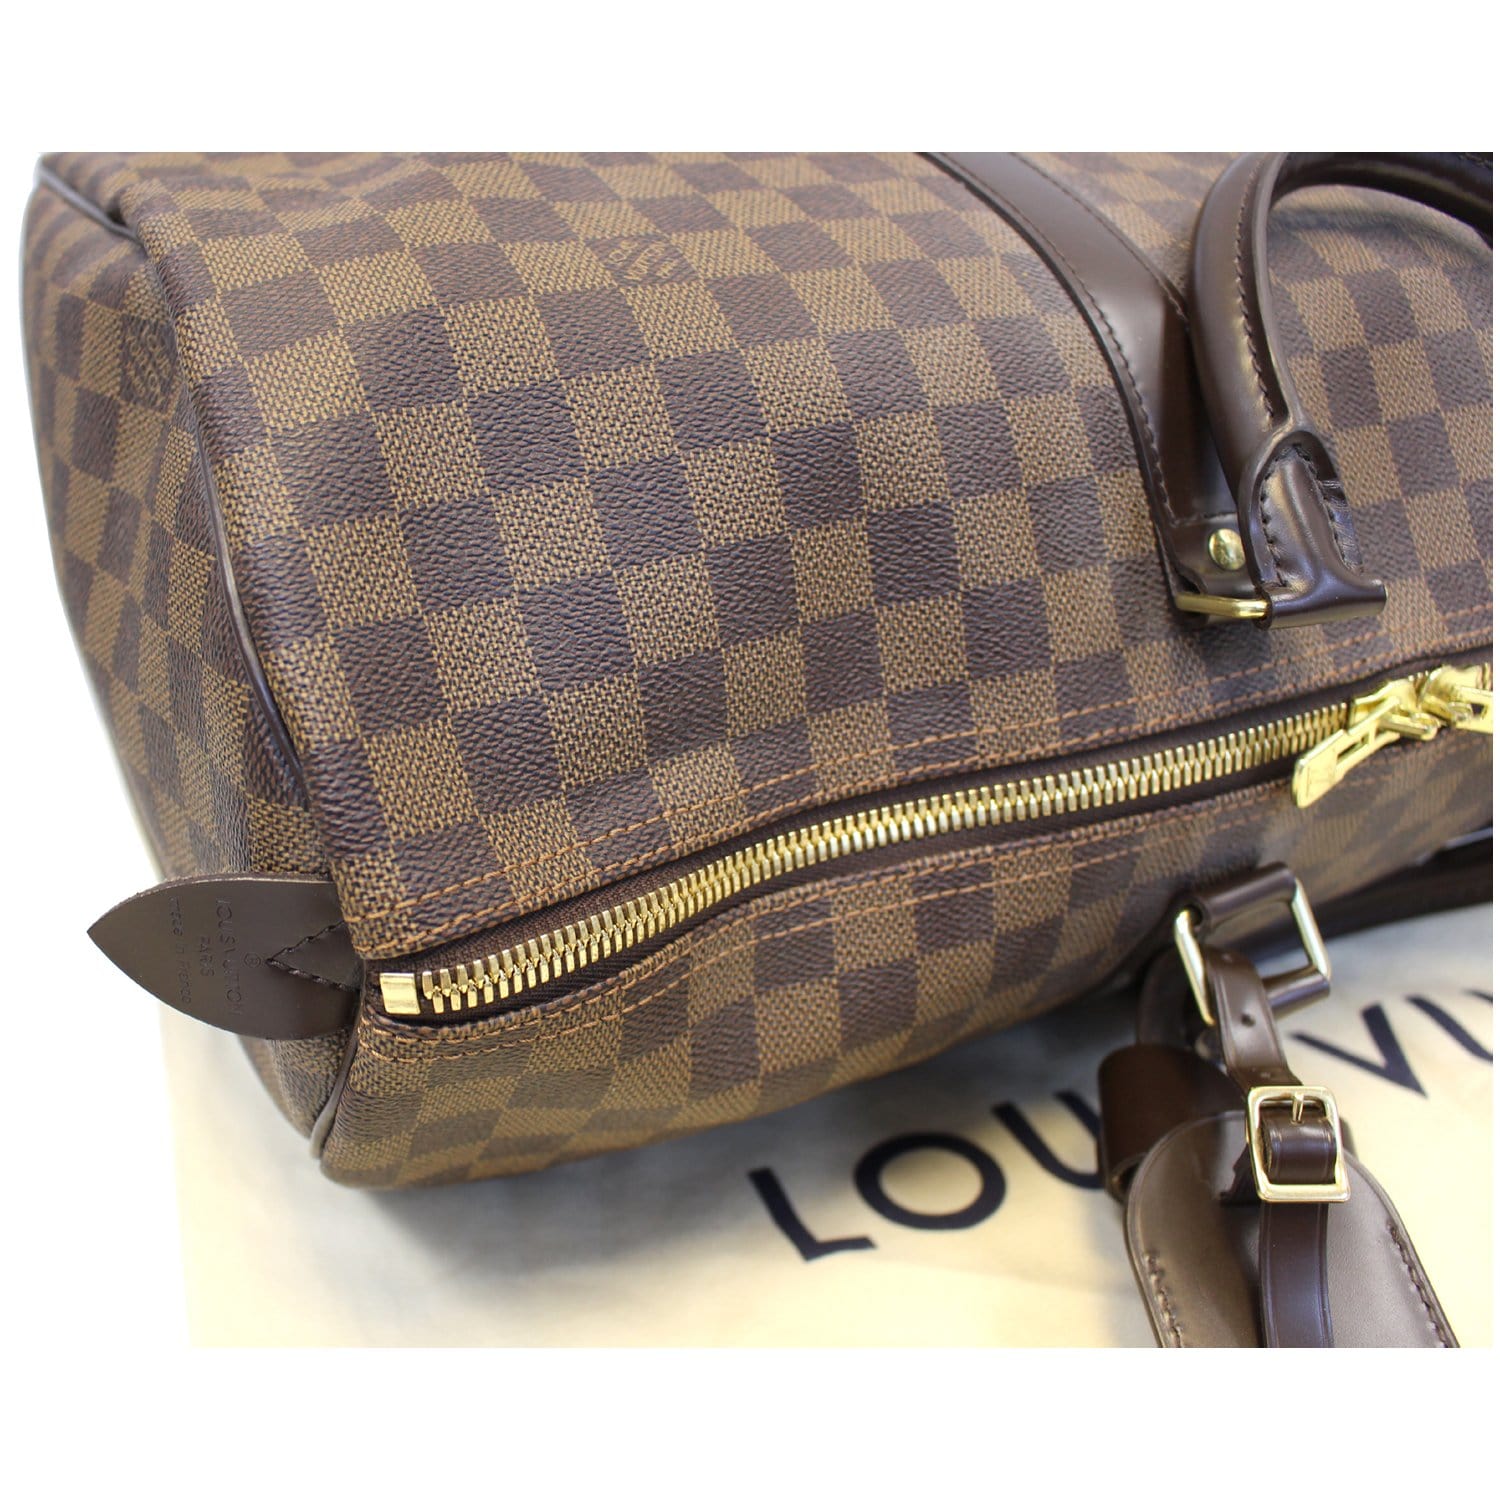 Louis-Vuitton Damier Keep All Boston Bag